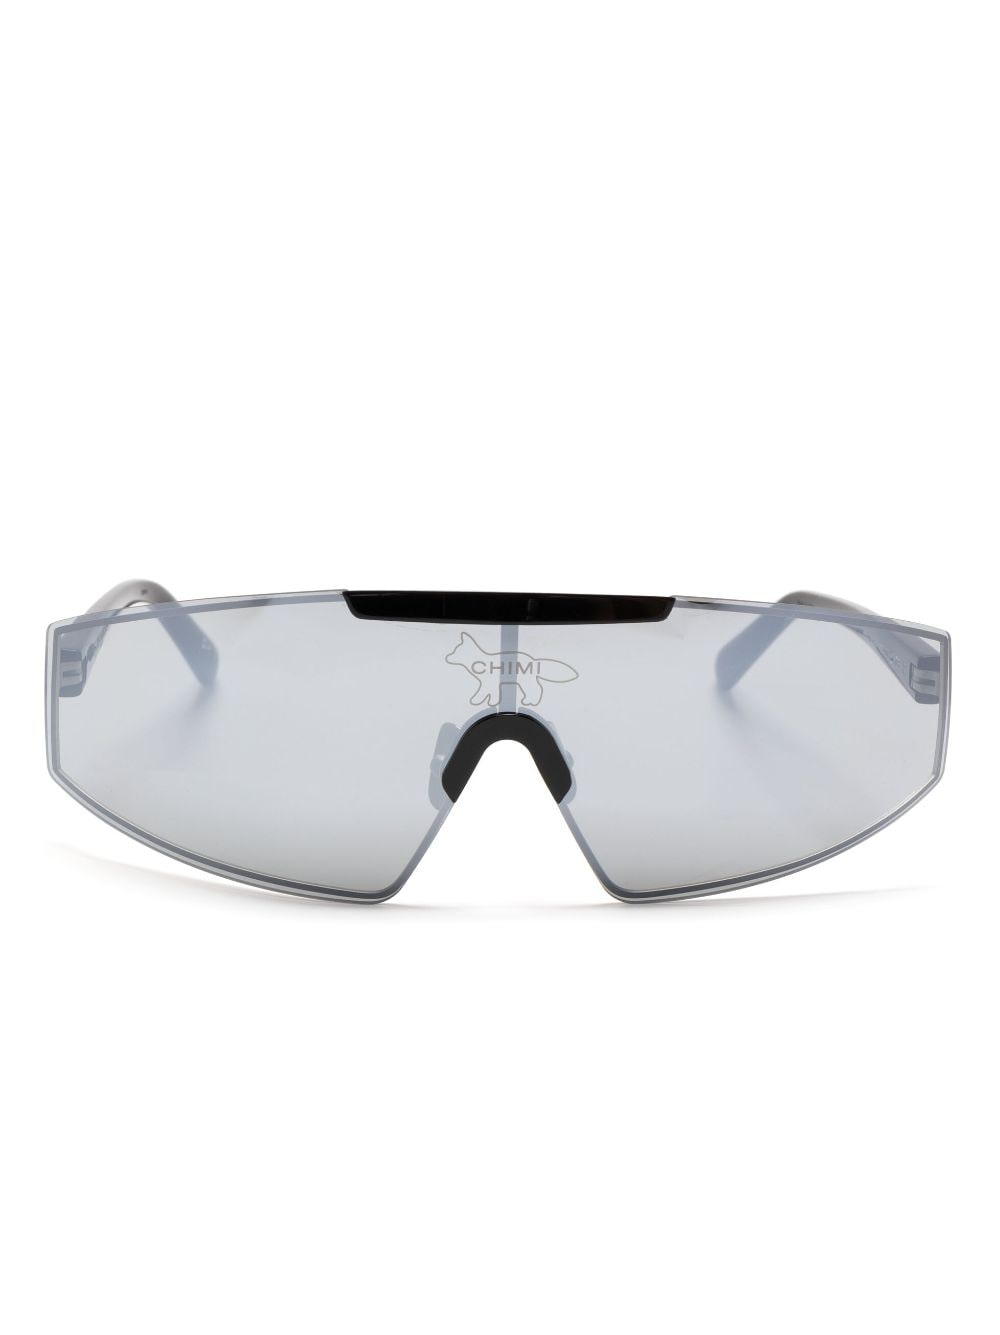 Maison Kitsuné x Chimi Shield visor tinted sunglasses - Black von Maison Kitsuné